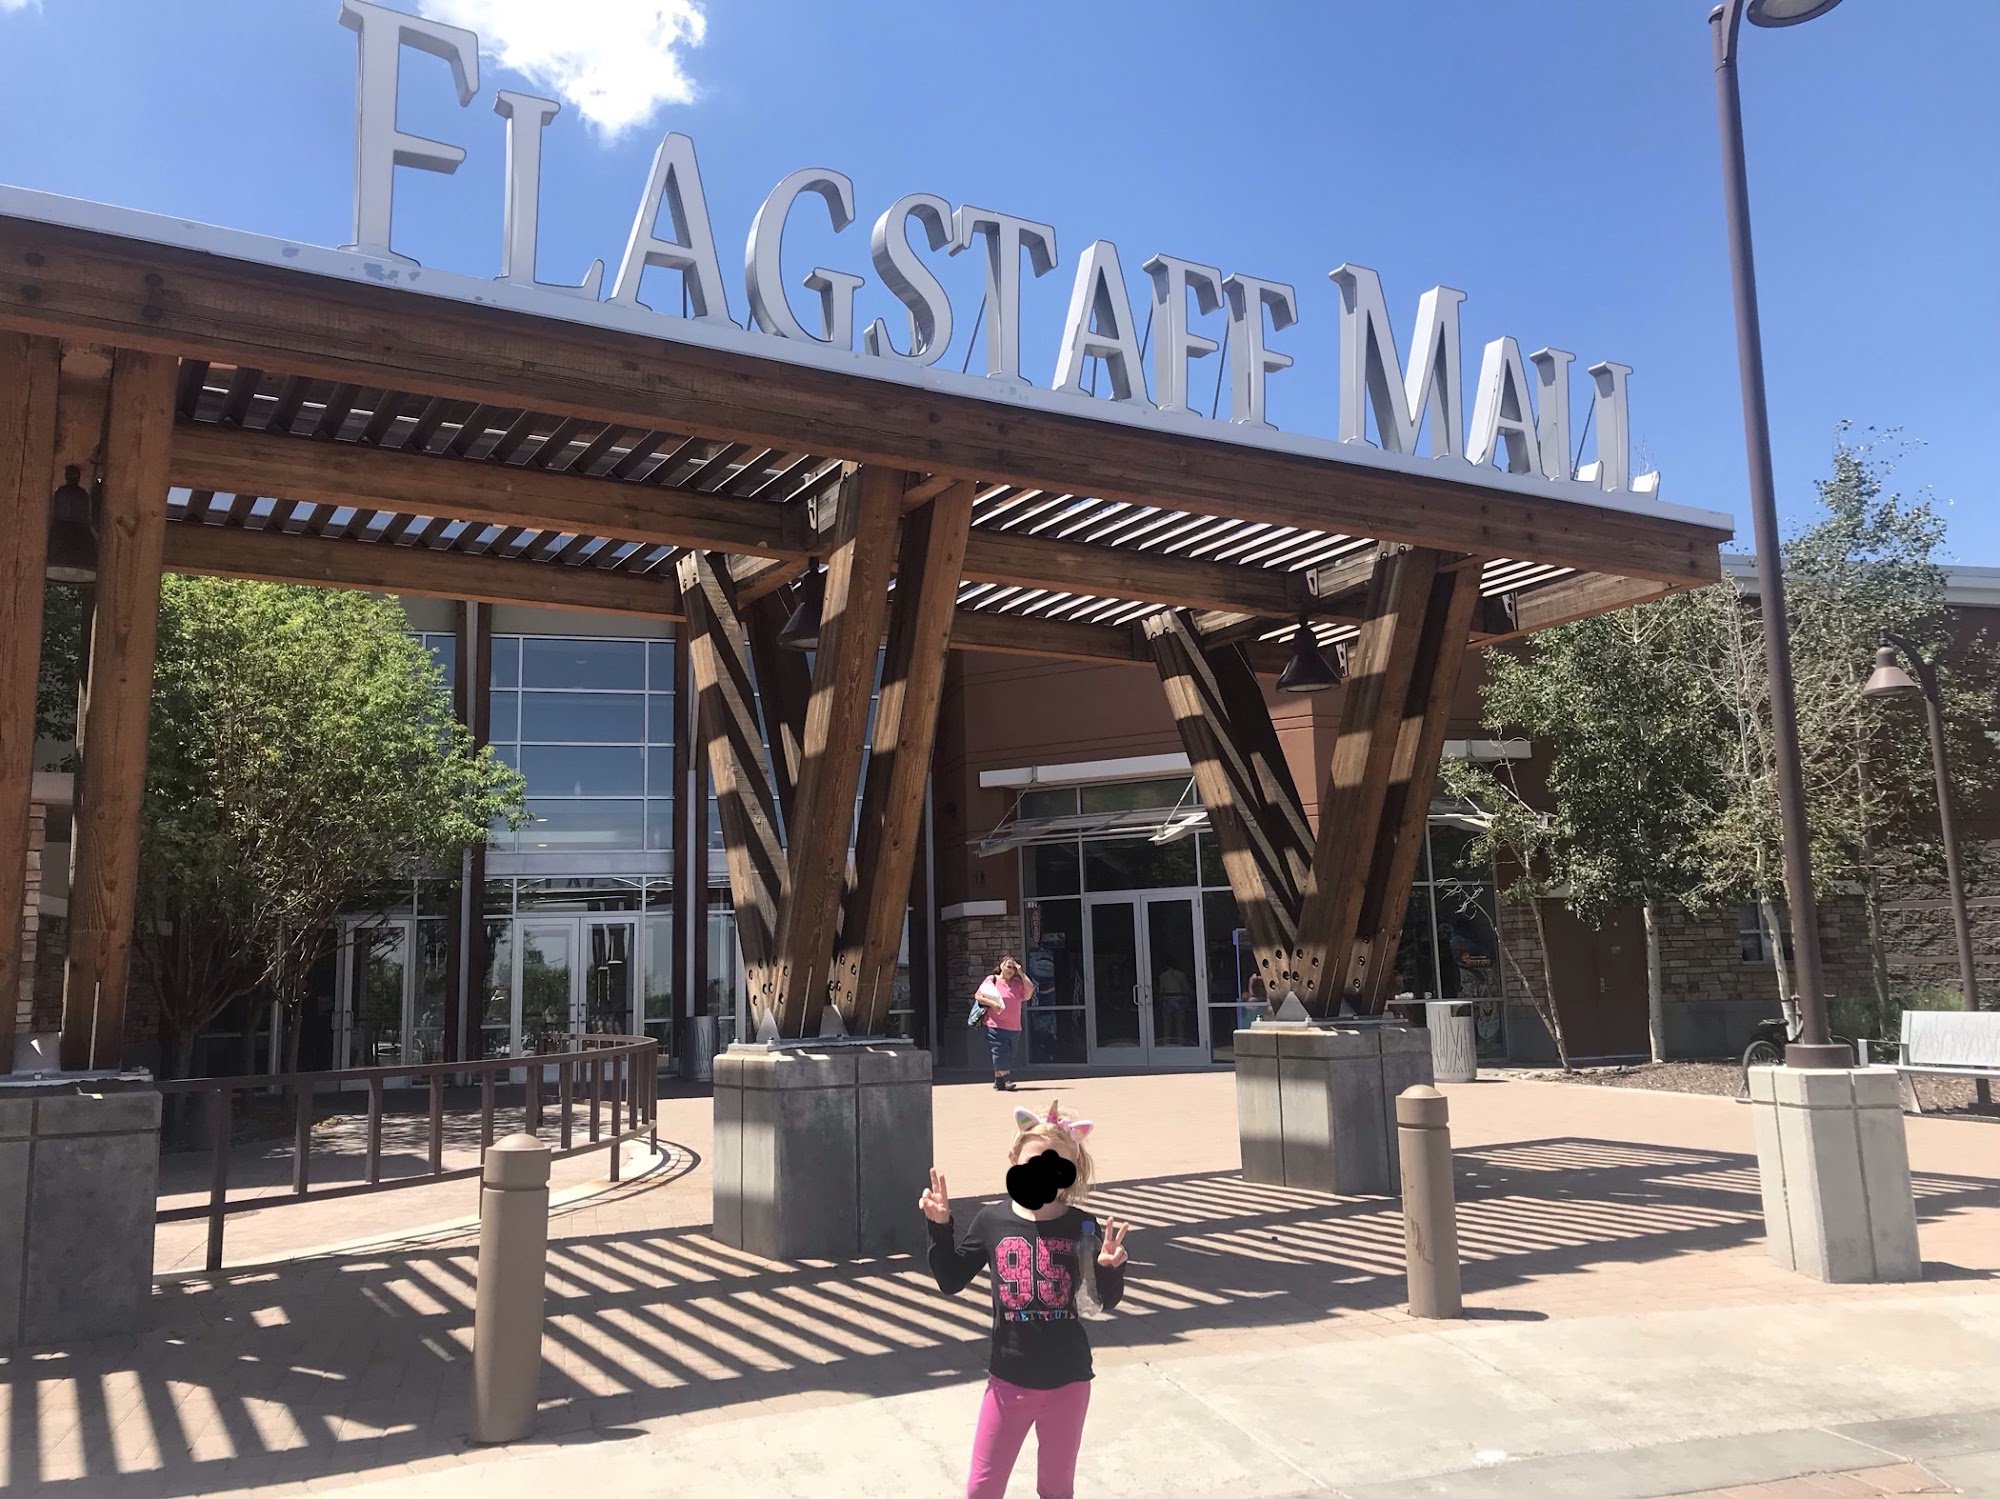 Flagstaff Mall